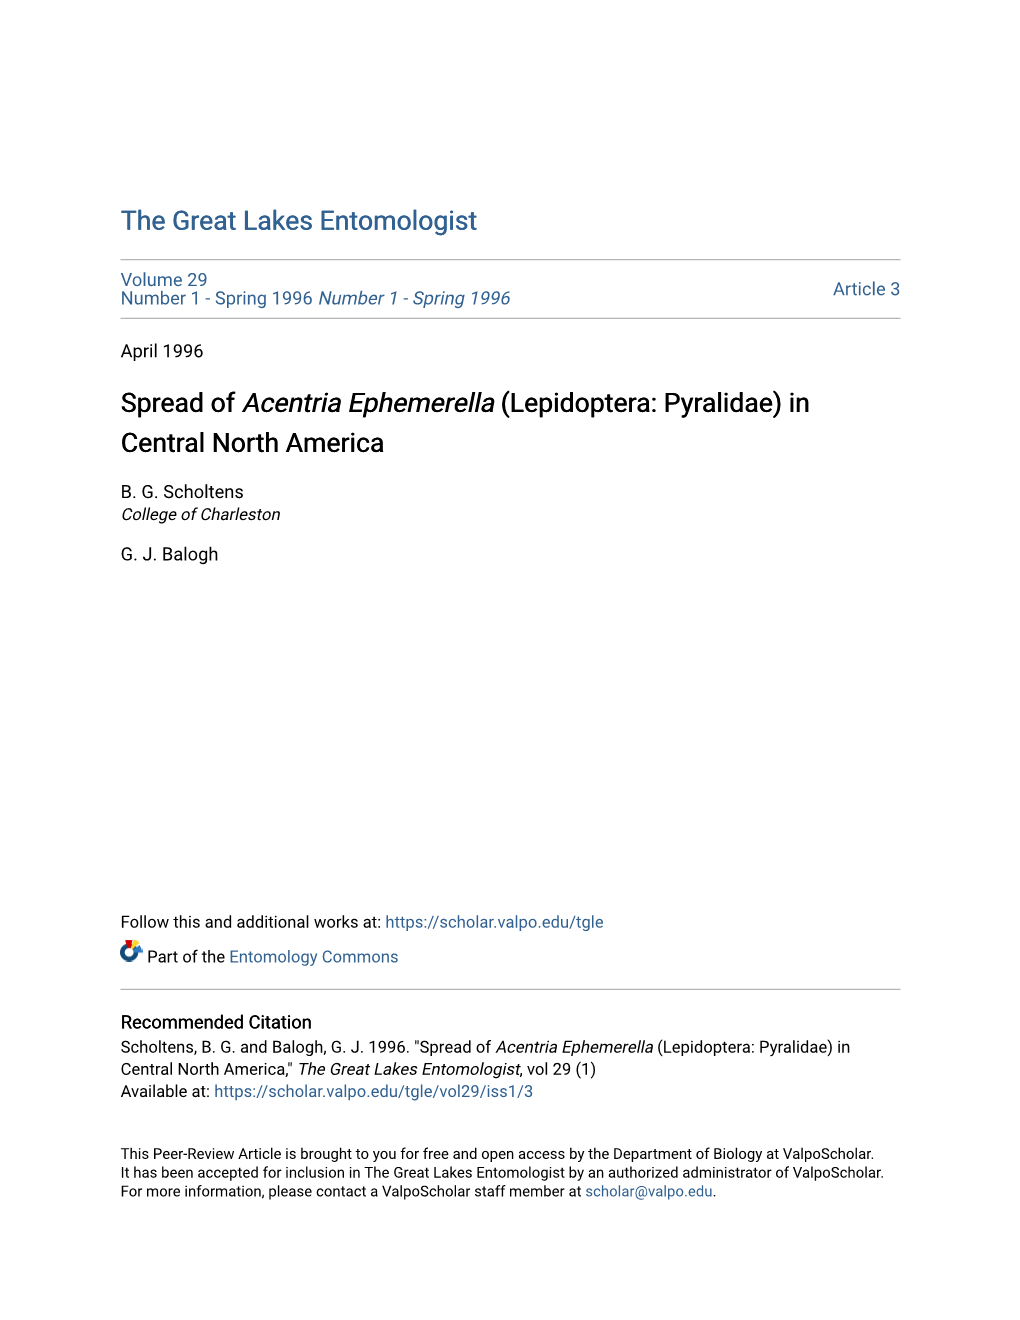 Spread of Acentria Ephemerella (Lepidoptera: Pyralidae) in Central North America